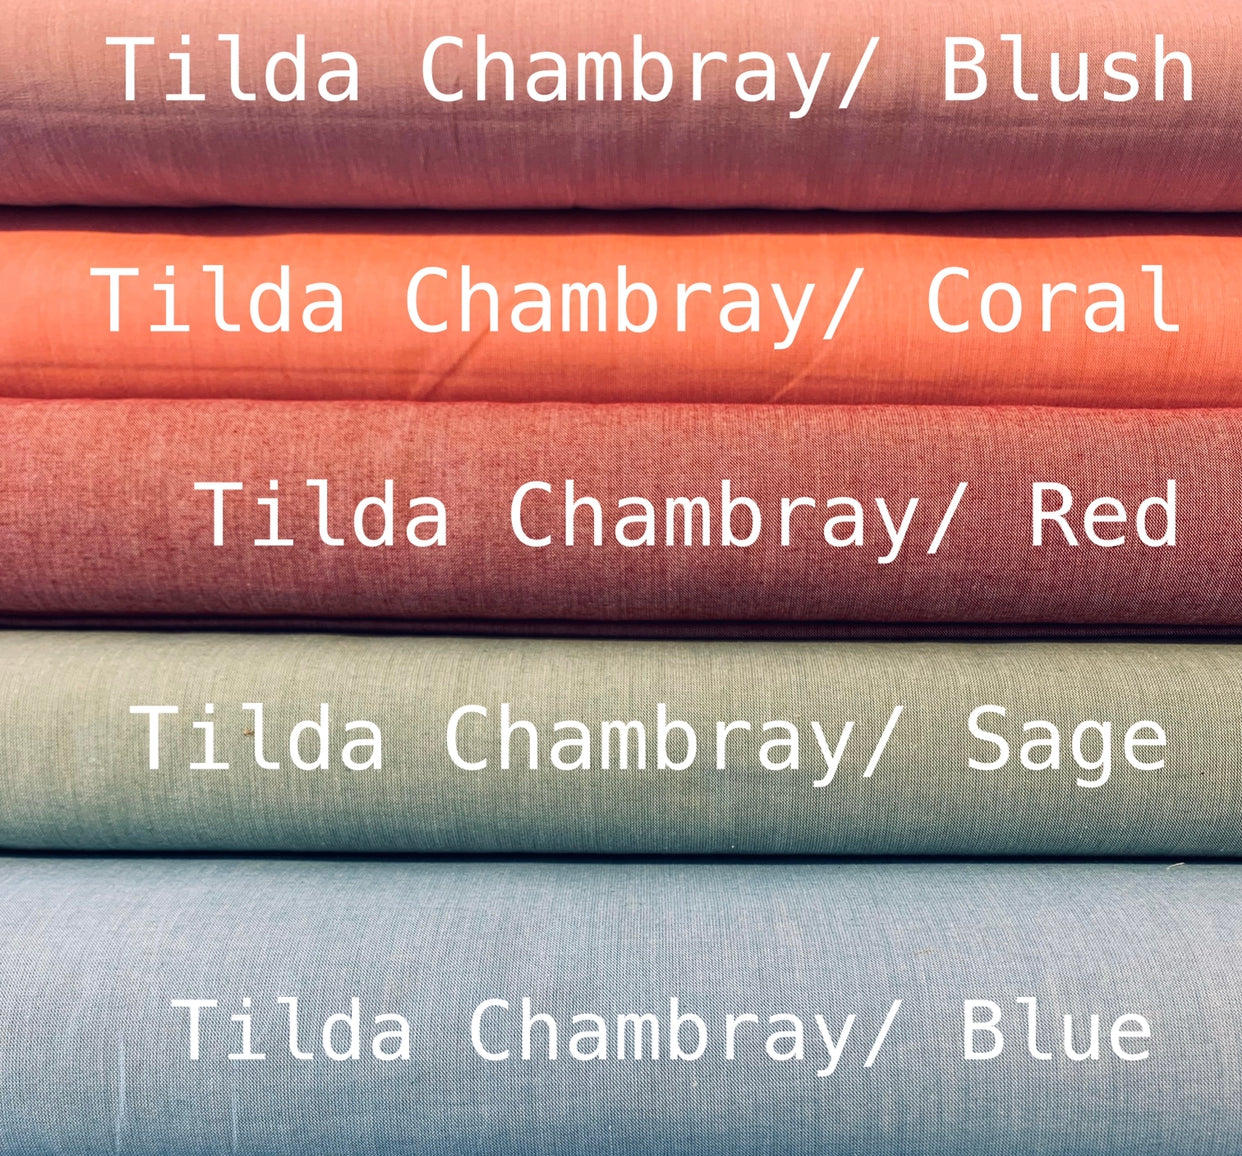 Tilda Chambray: Blue